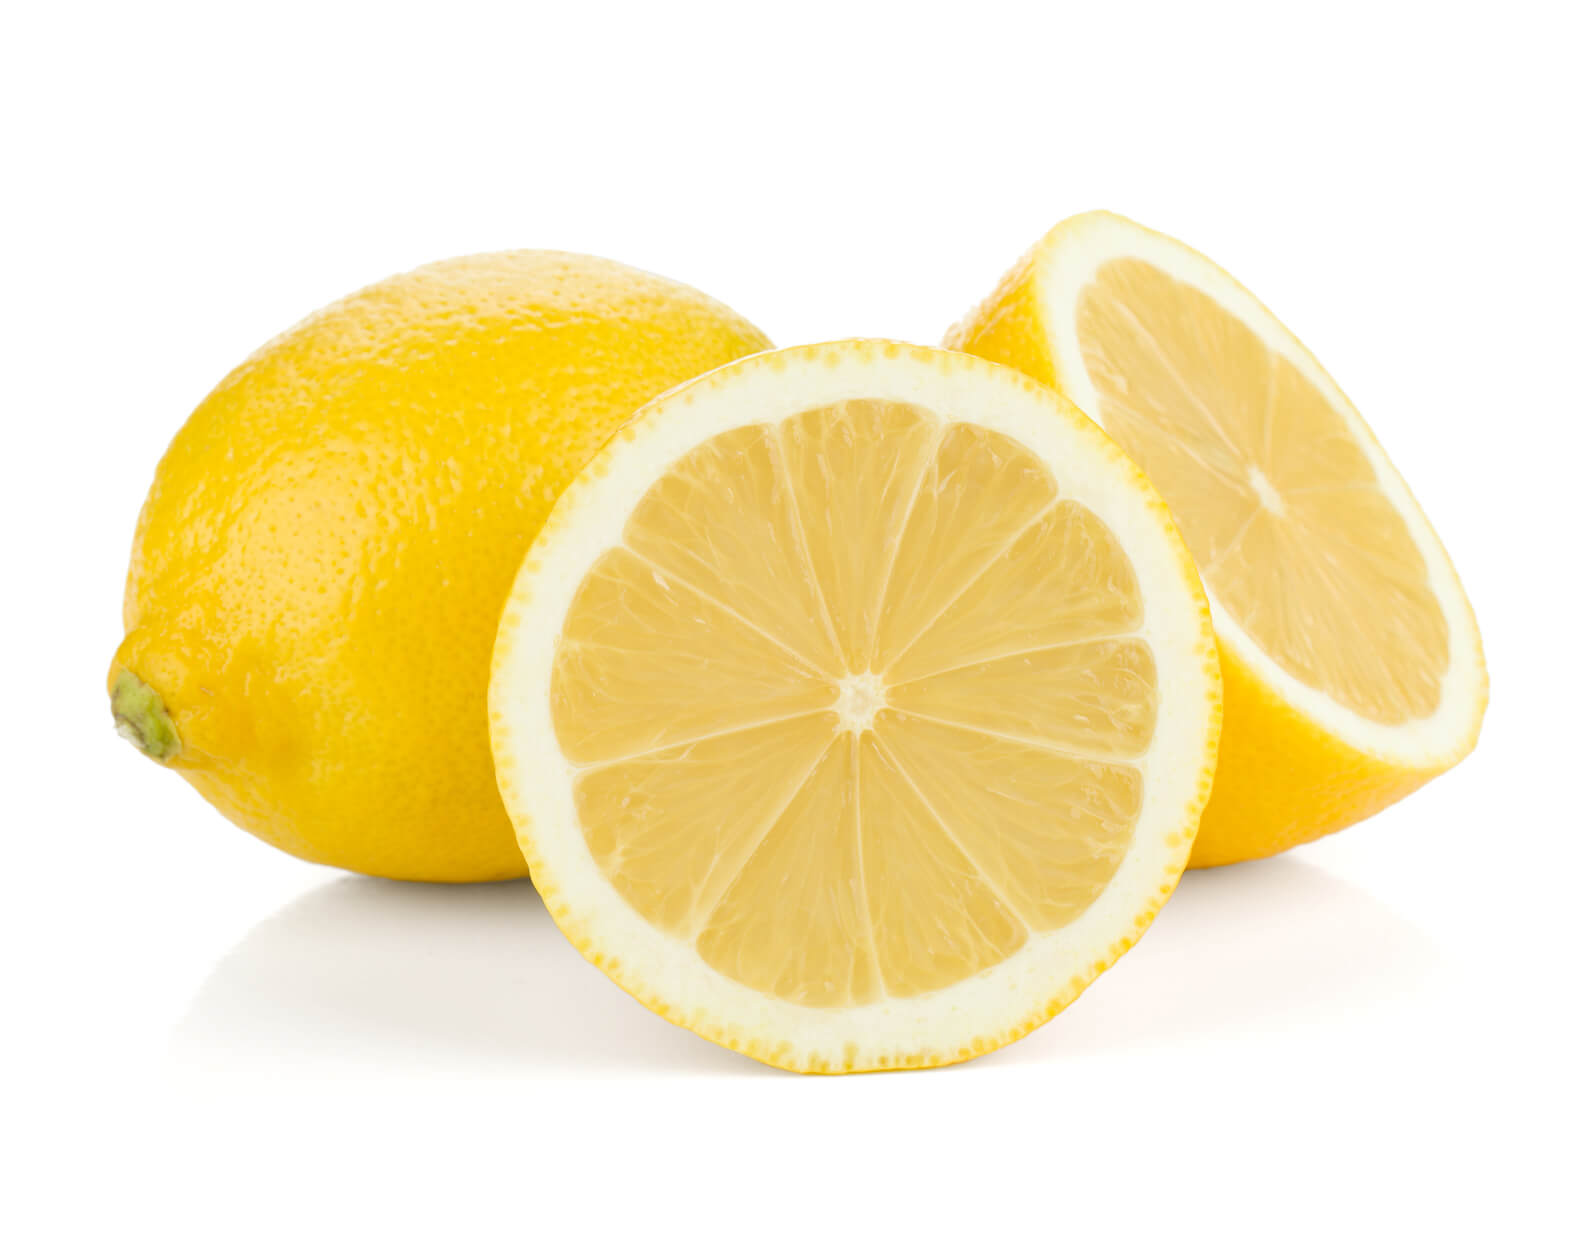 health benefits of eating citrus